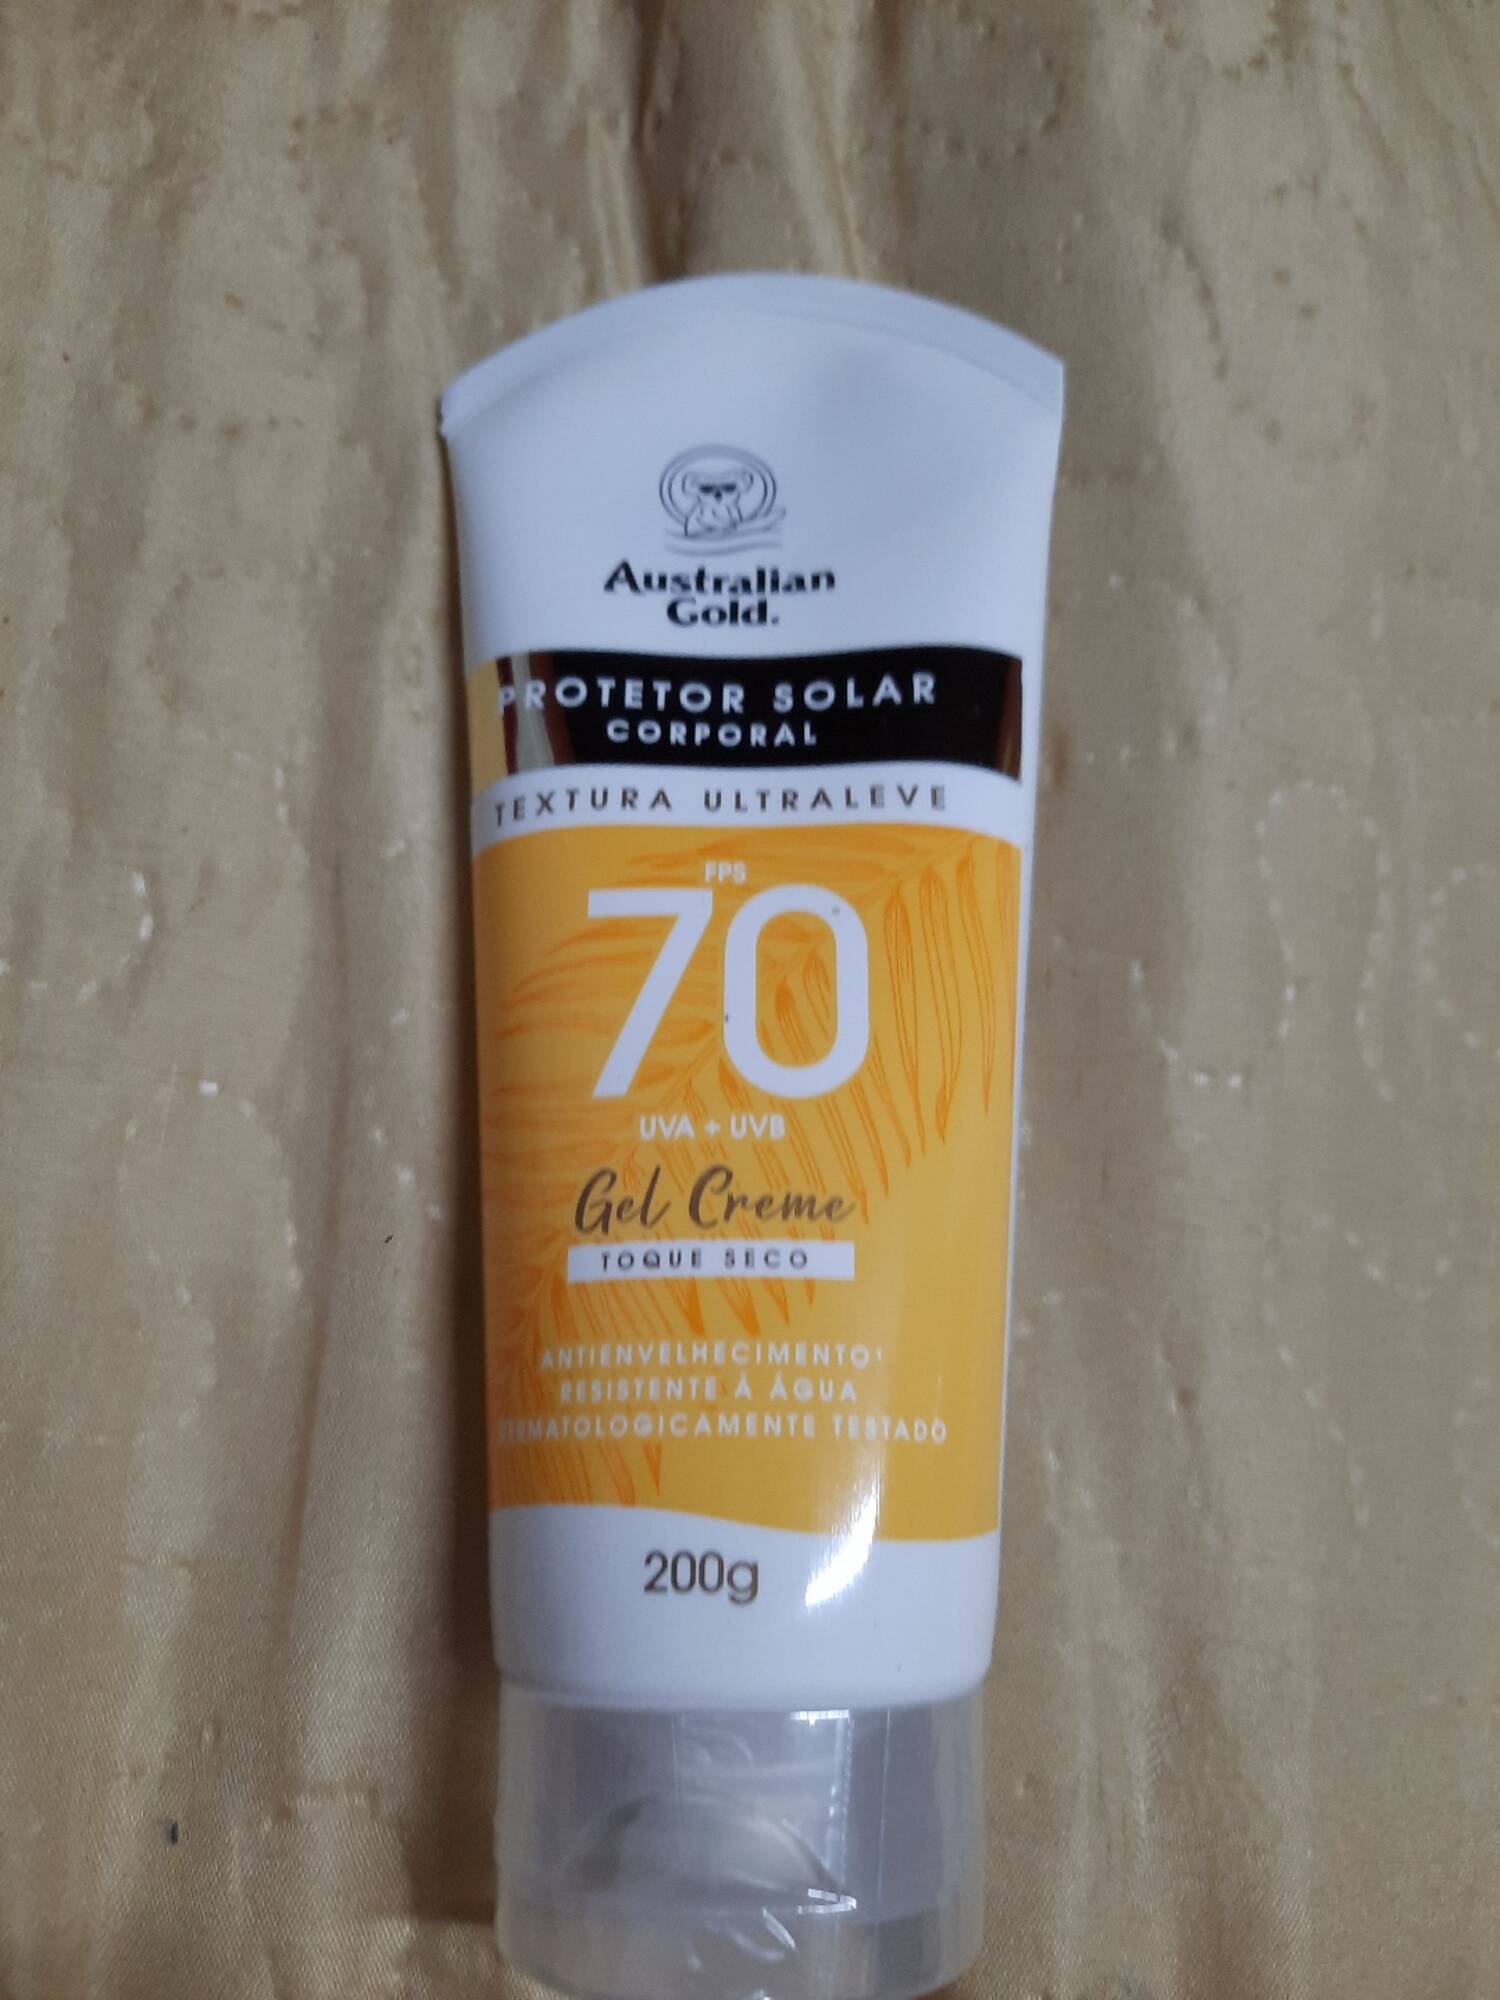 AUSTRALIAN GOLD - Protetor solar corporal gel creme FPS 70